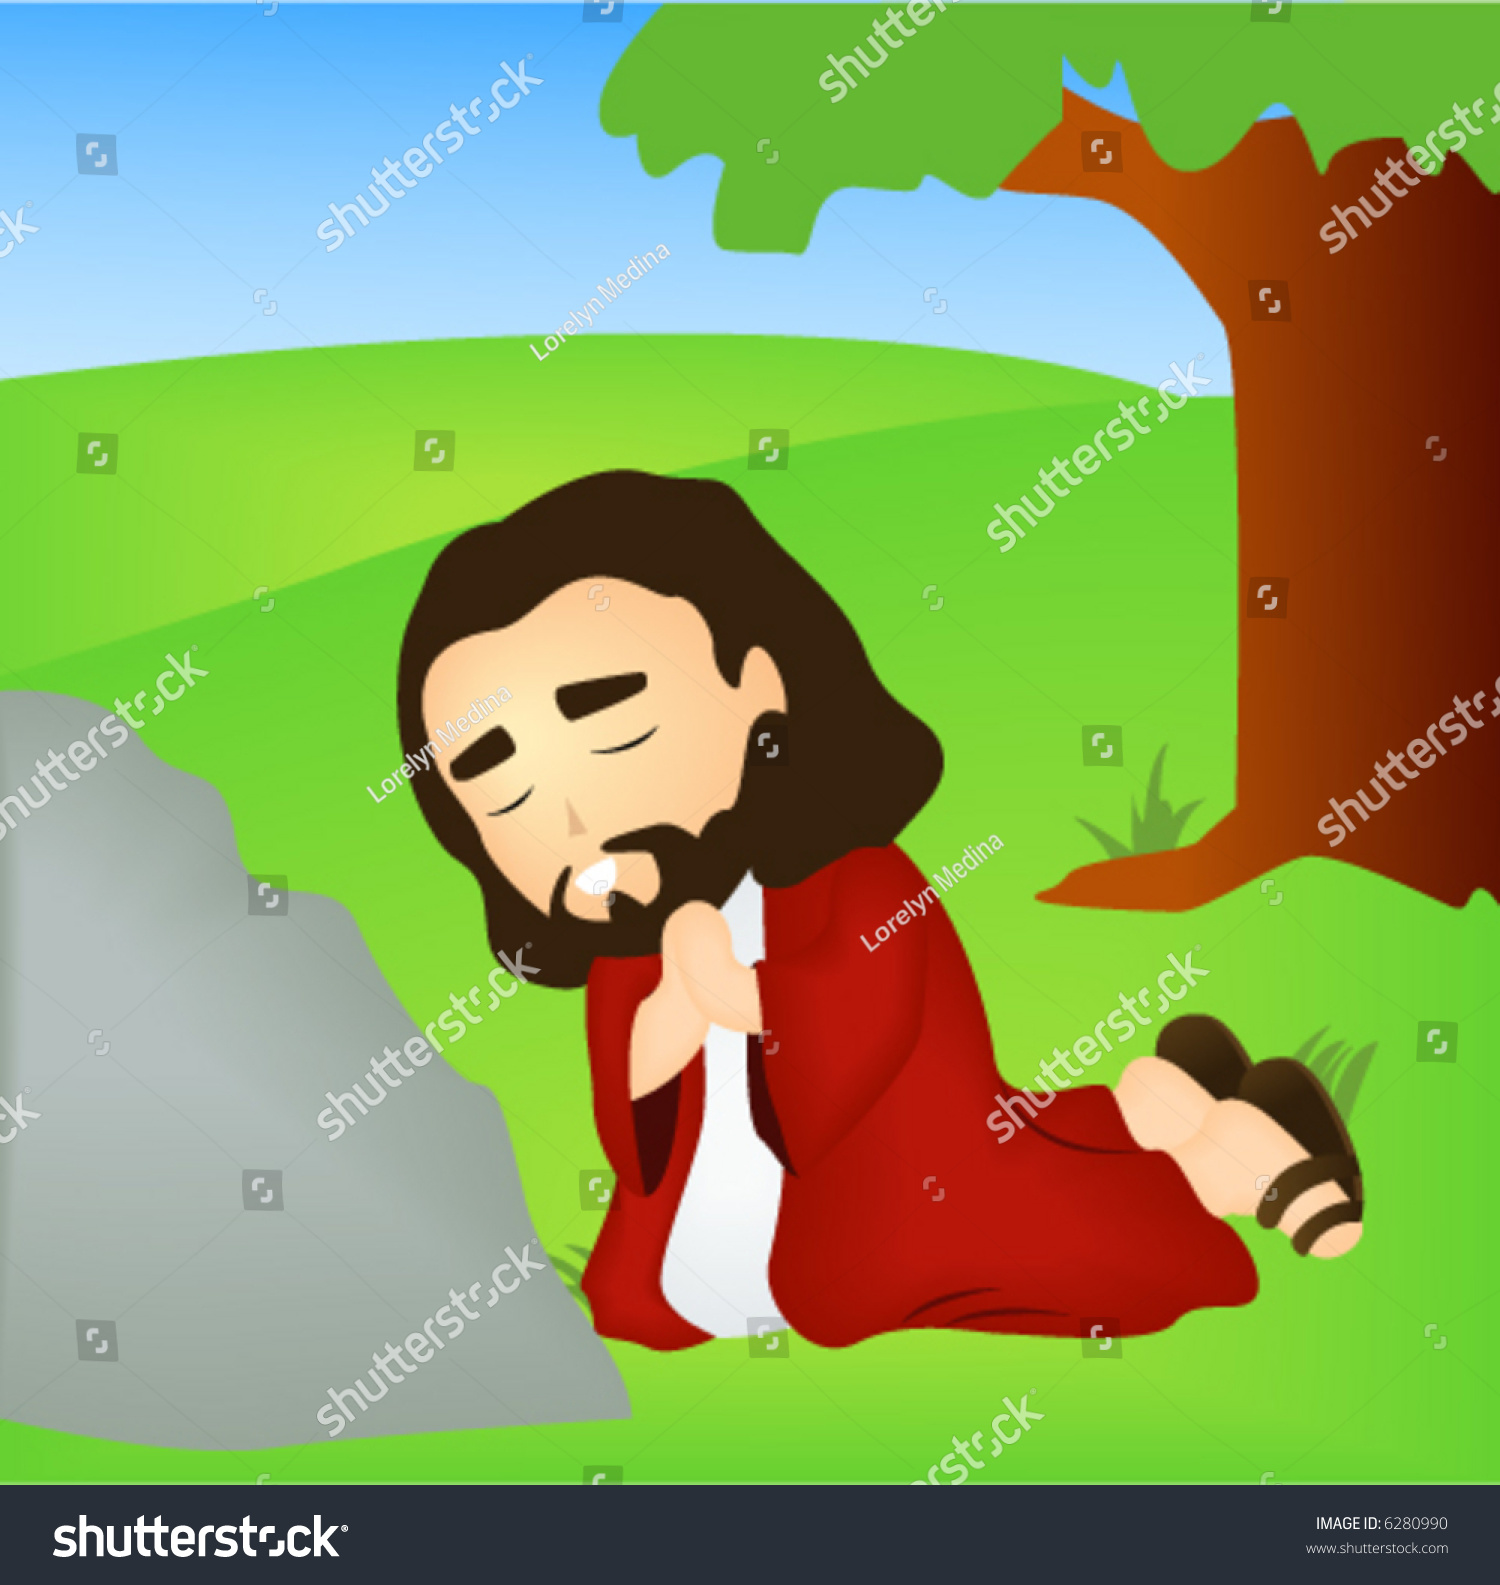 clipart jesus praying in the garden - photo #36